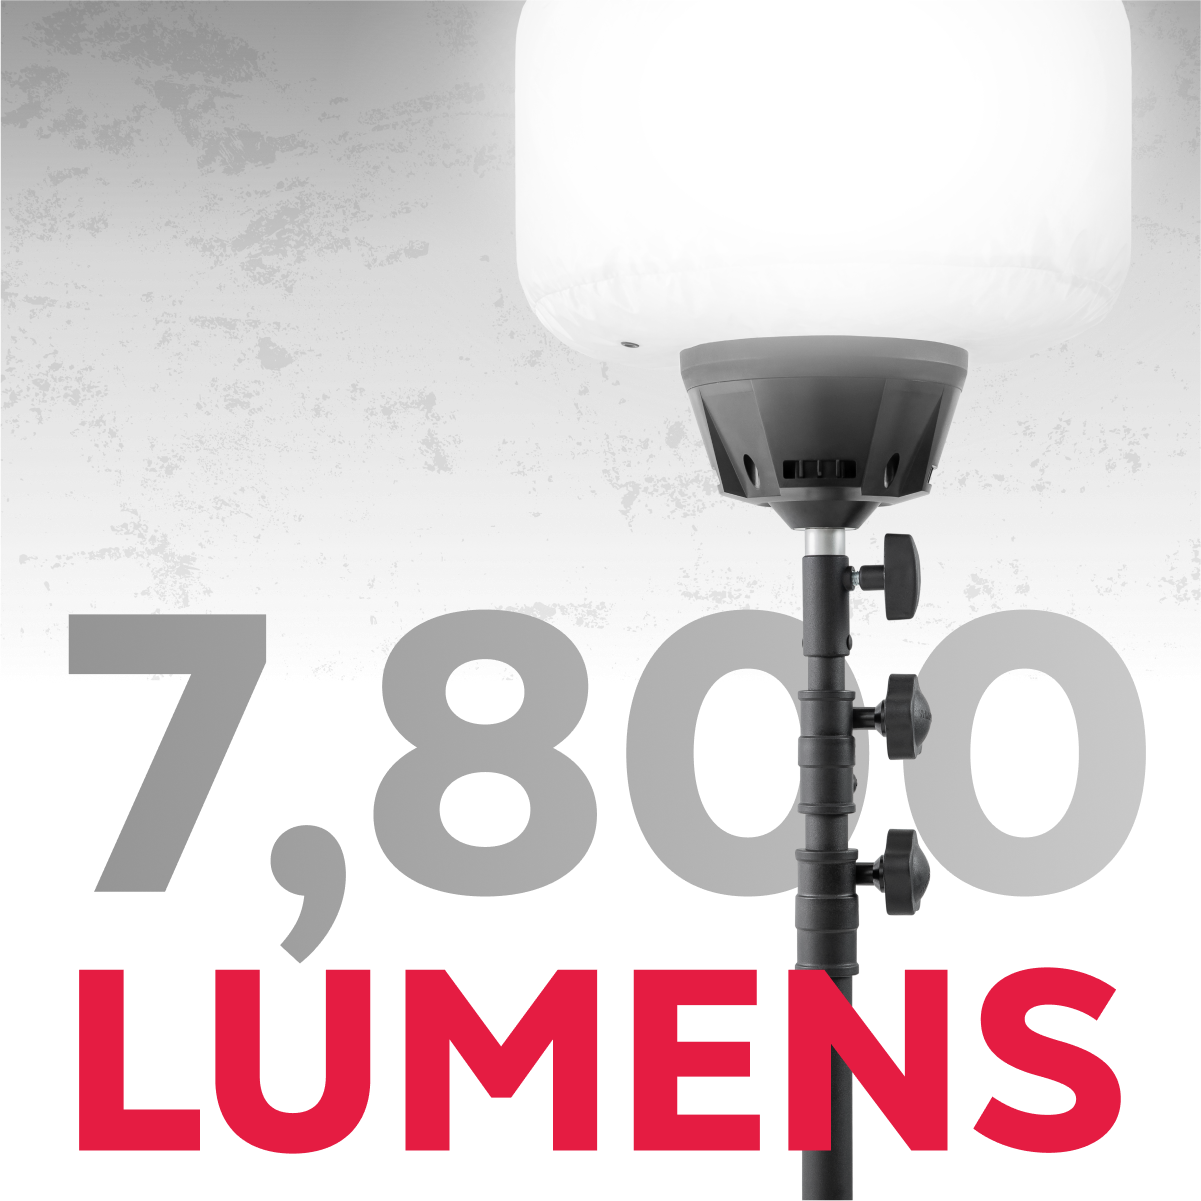 7,800 Lumens LED Balloon Light Kit